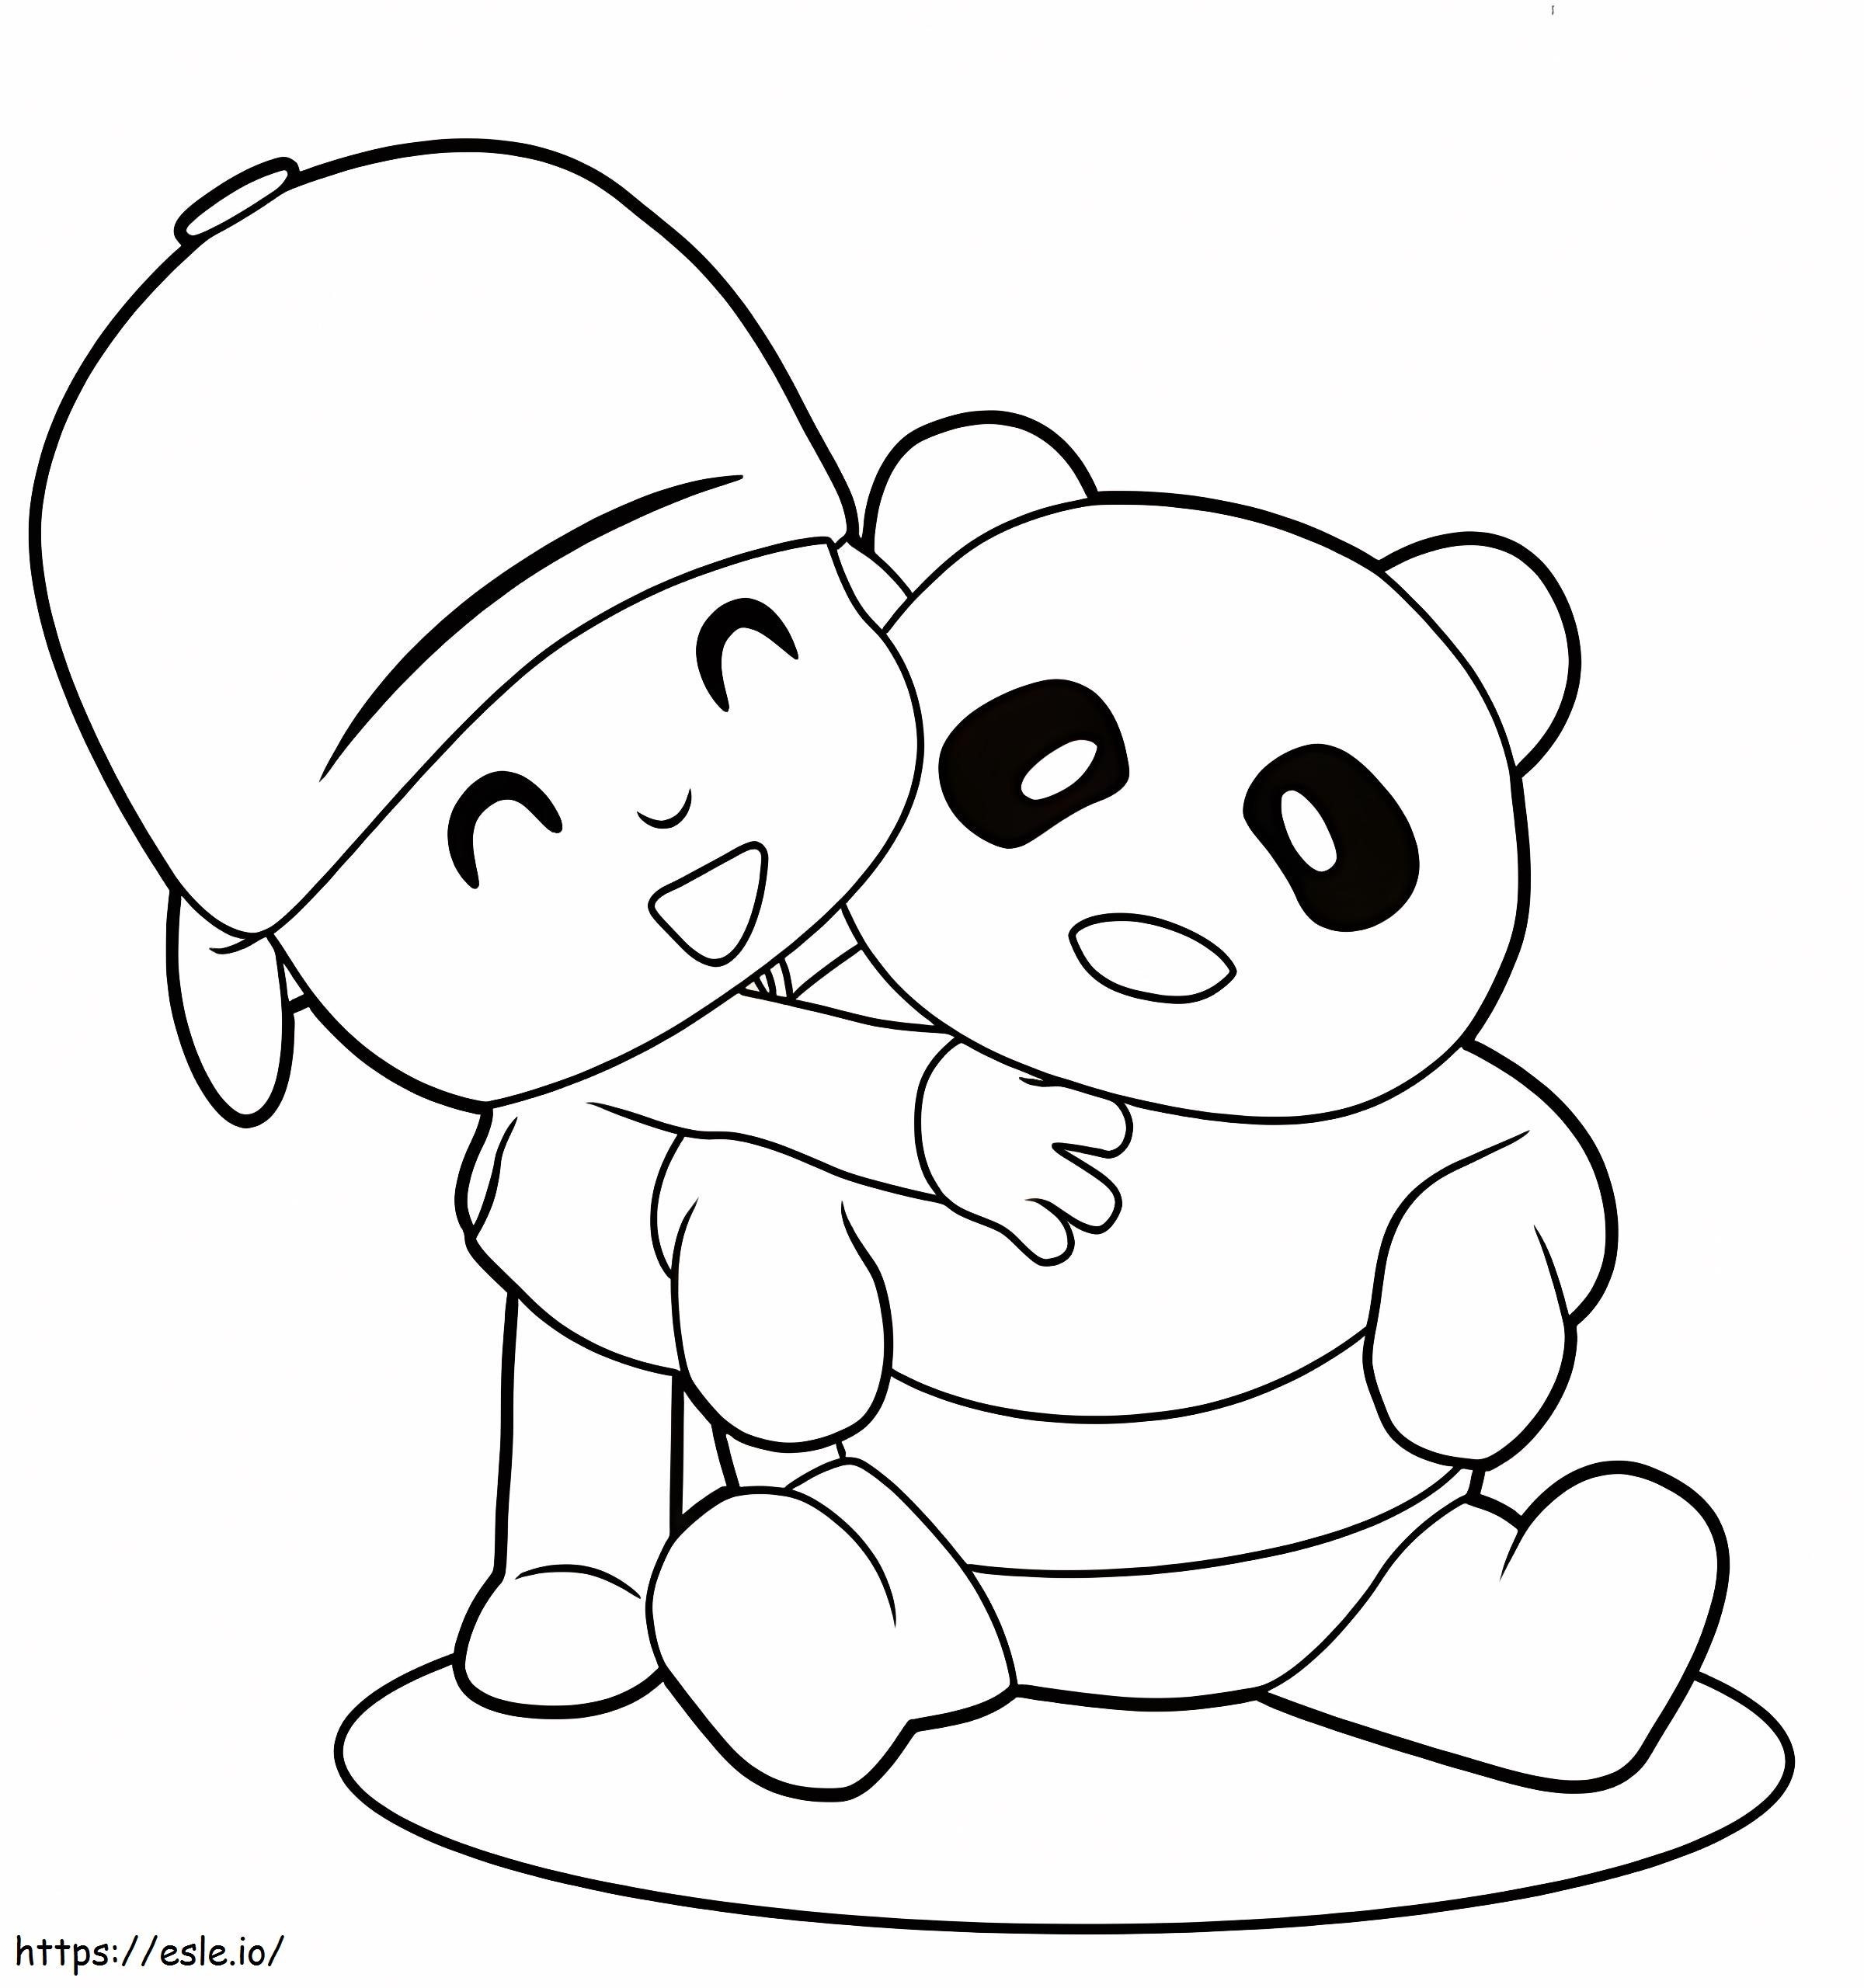 Pocoyo Hugs Panda coloring page